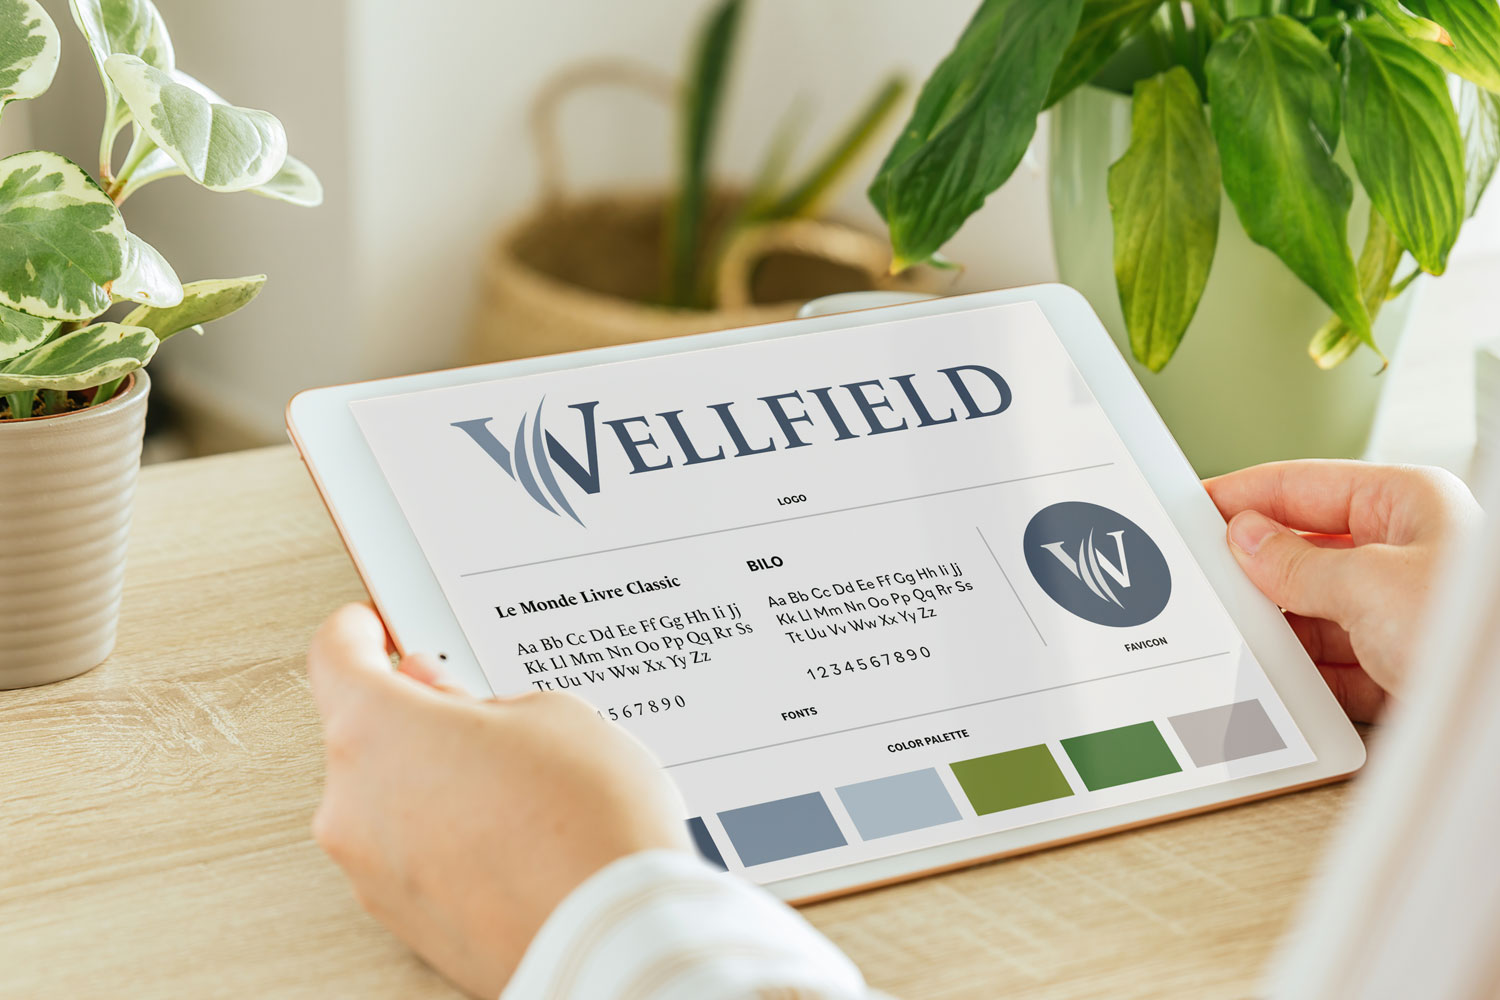 Wellfield Community Branding on an iPad